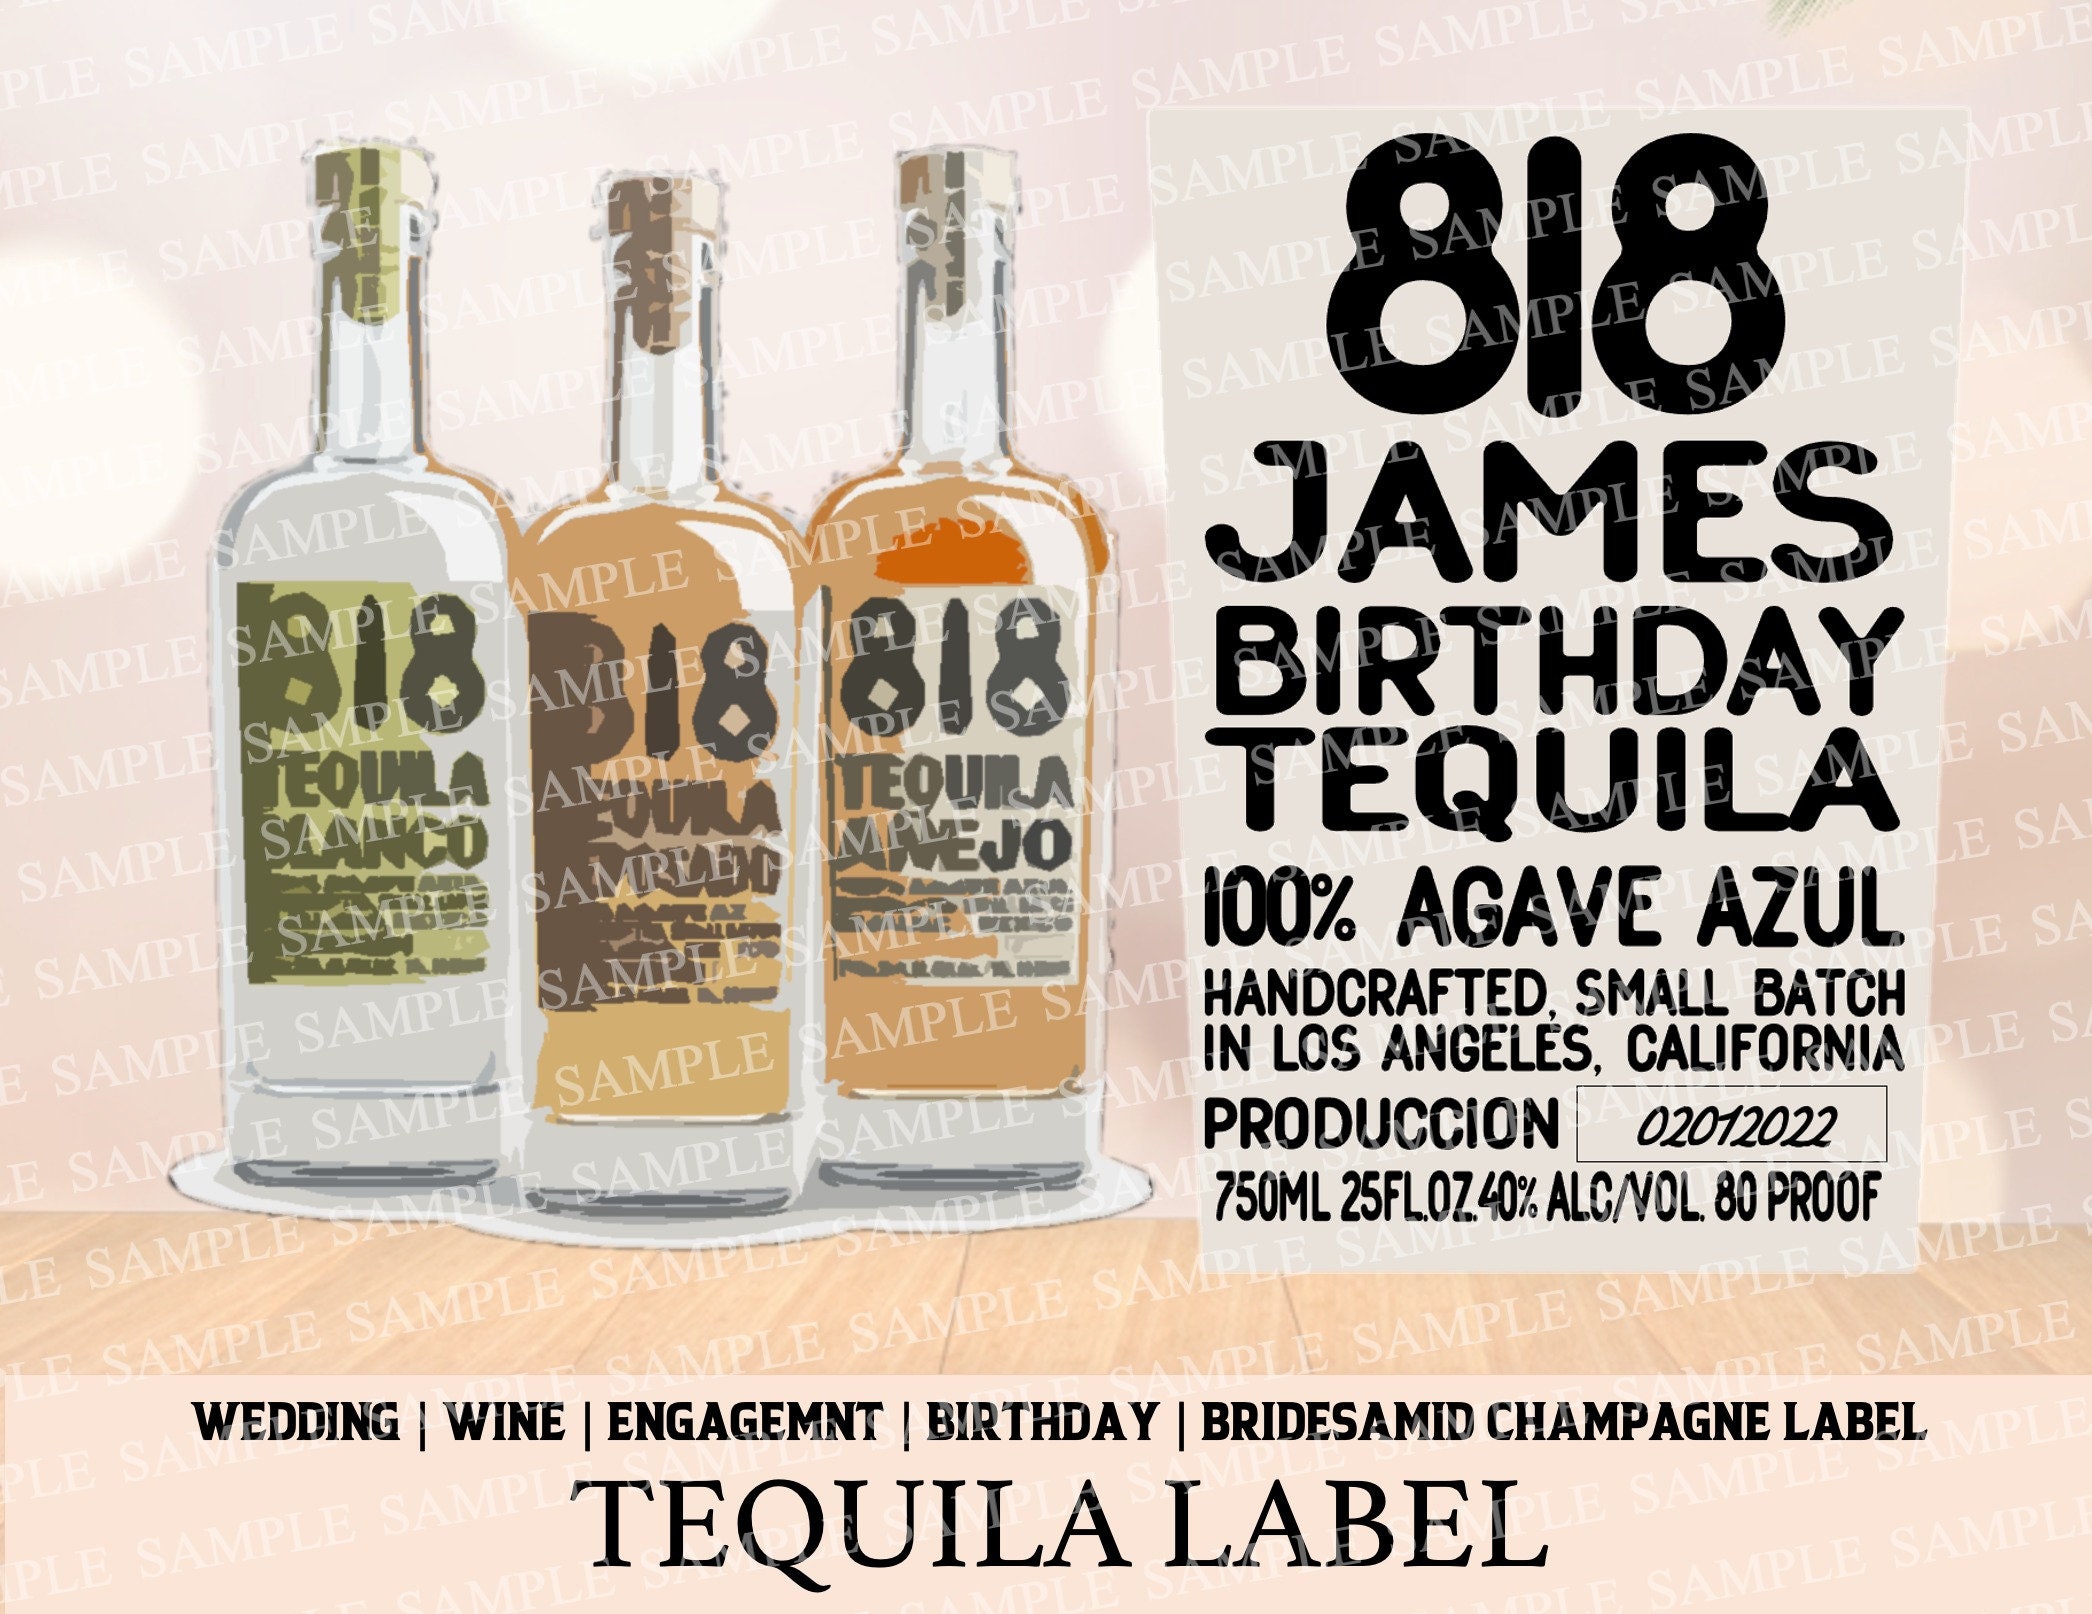 818 Текила. 818 Tequila logo. 818 Tequila about. 818 Tequila product. Текила 818